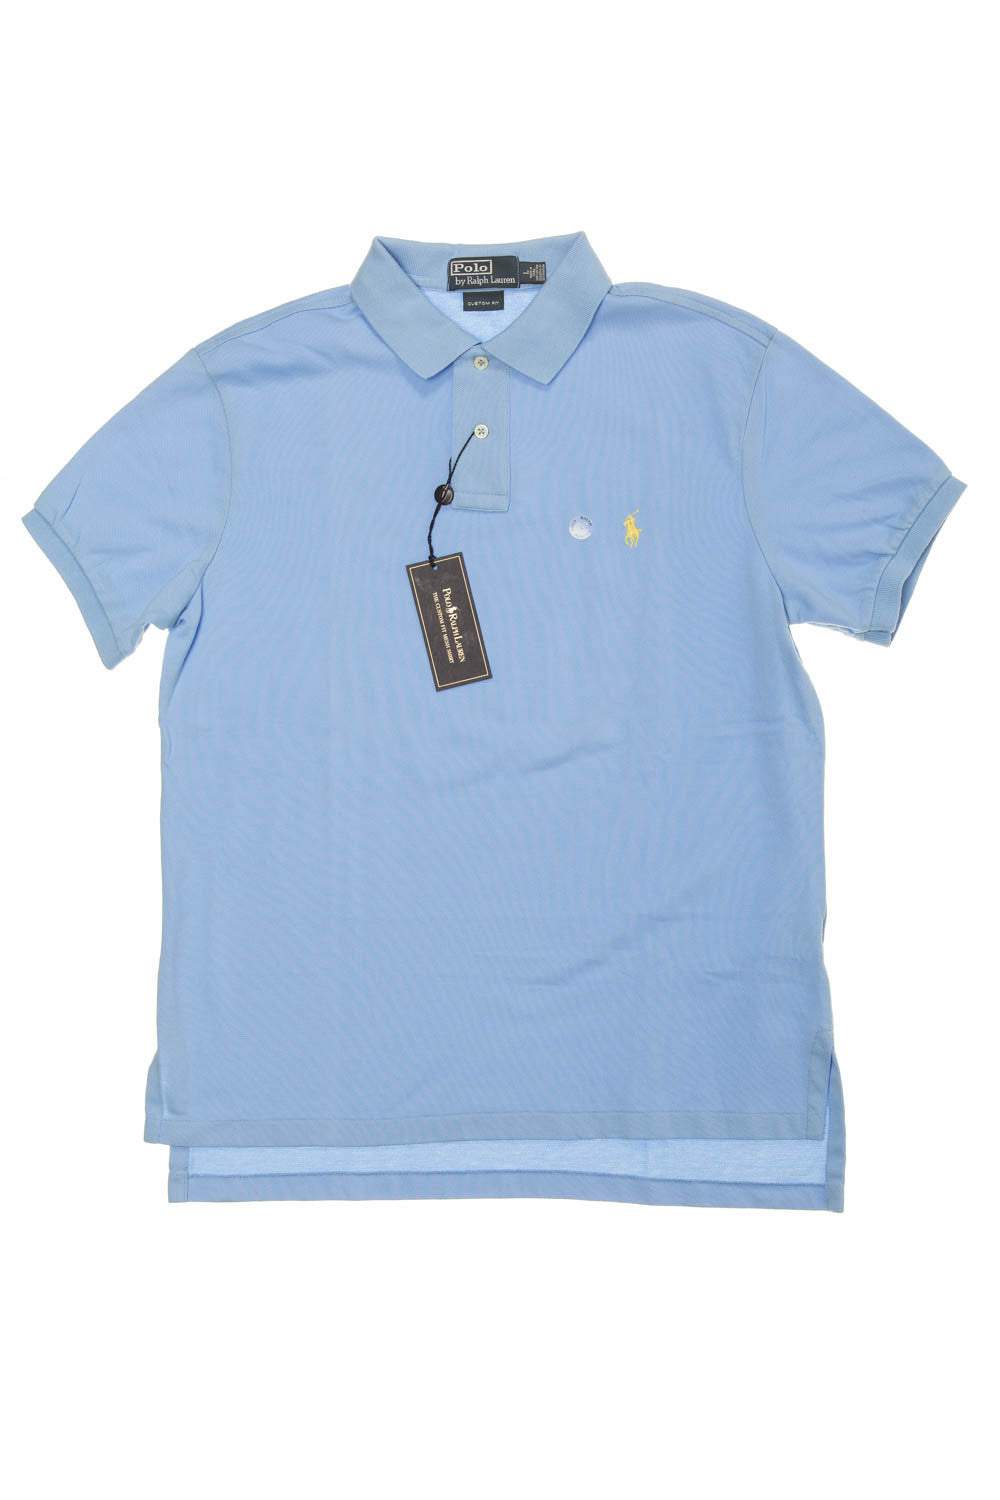 mineraal technisch Lotsbestemming Ralph Lauren - New with Tags Baby Blue Short Sleeve Polo - L – LUXHAVE